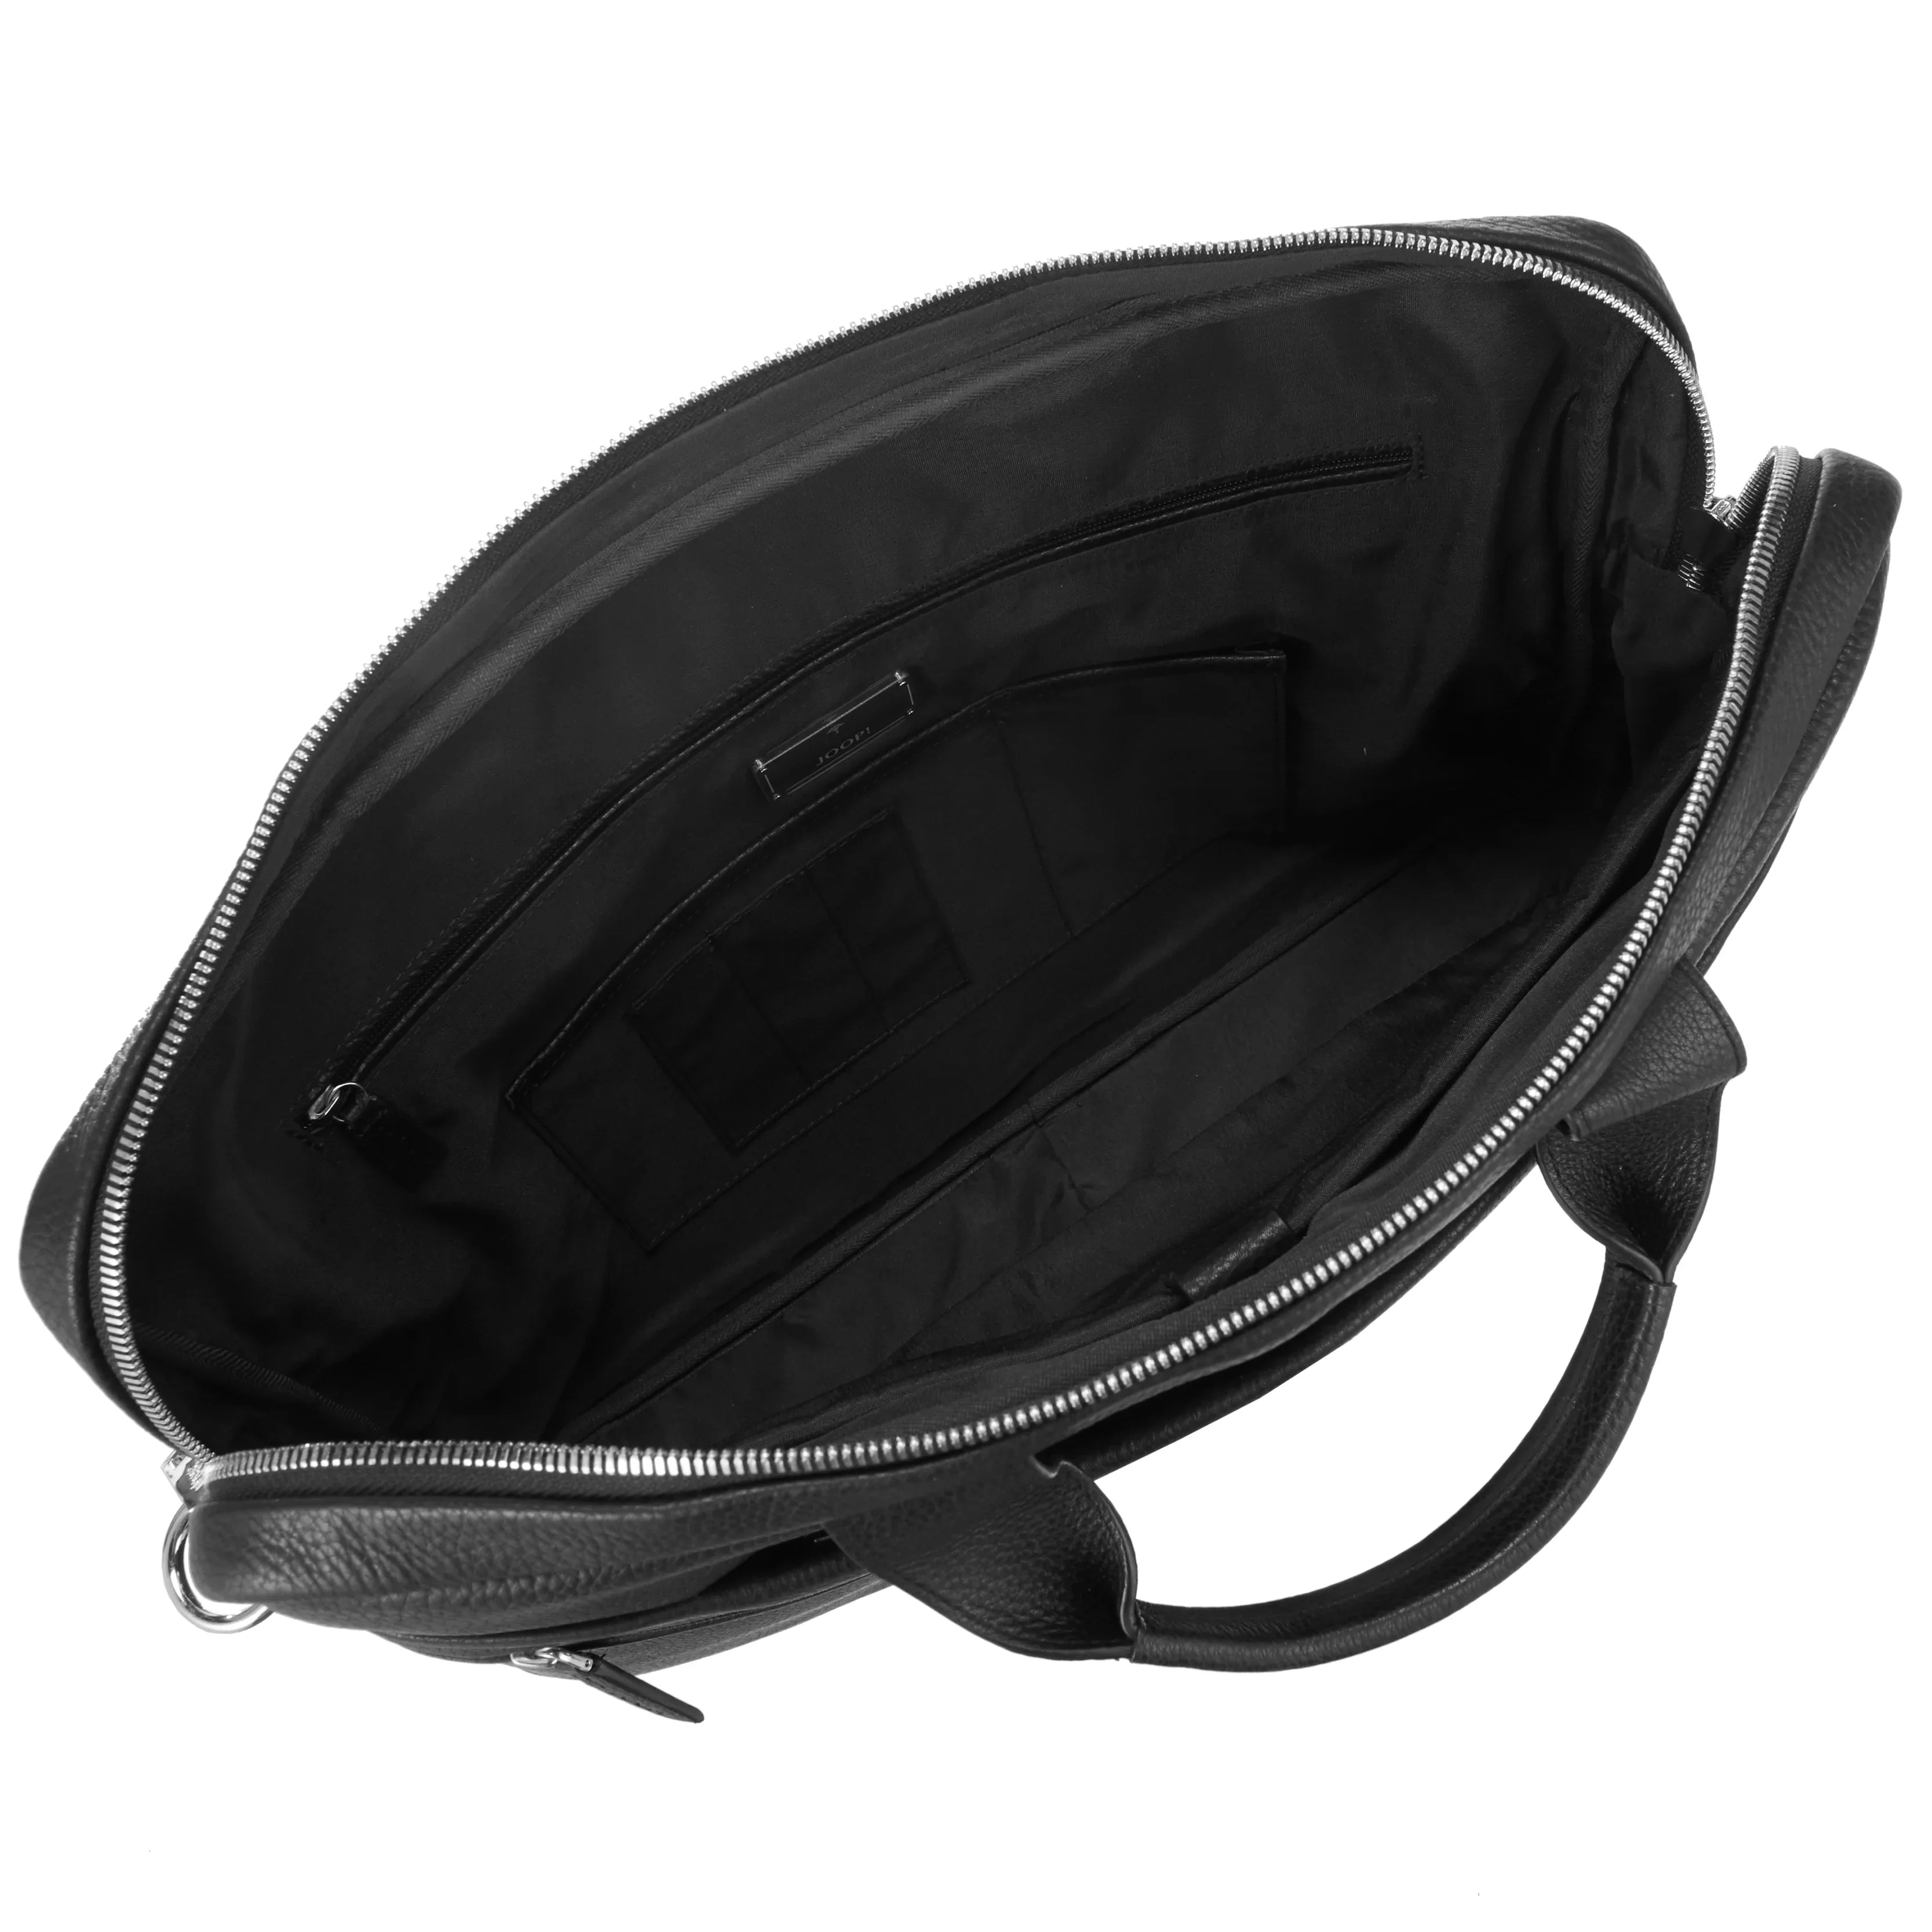 Joop Cardona Pandion Briefbag SHZ 2 44 cm - noir